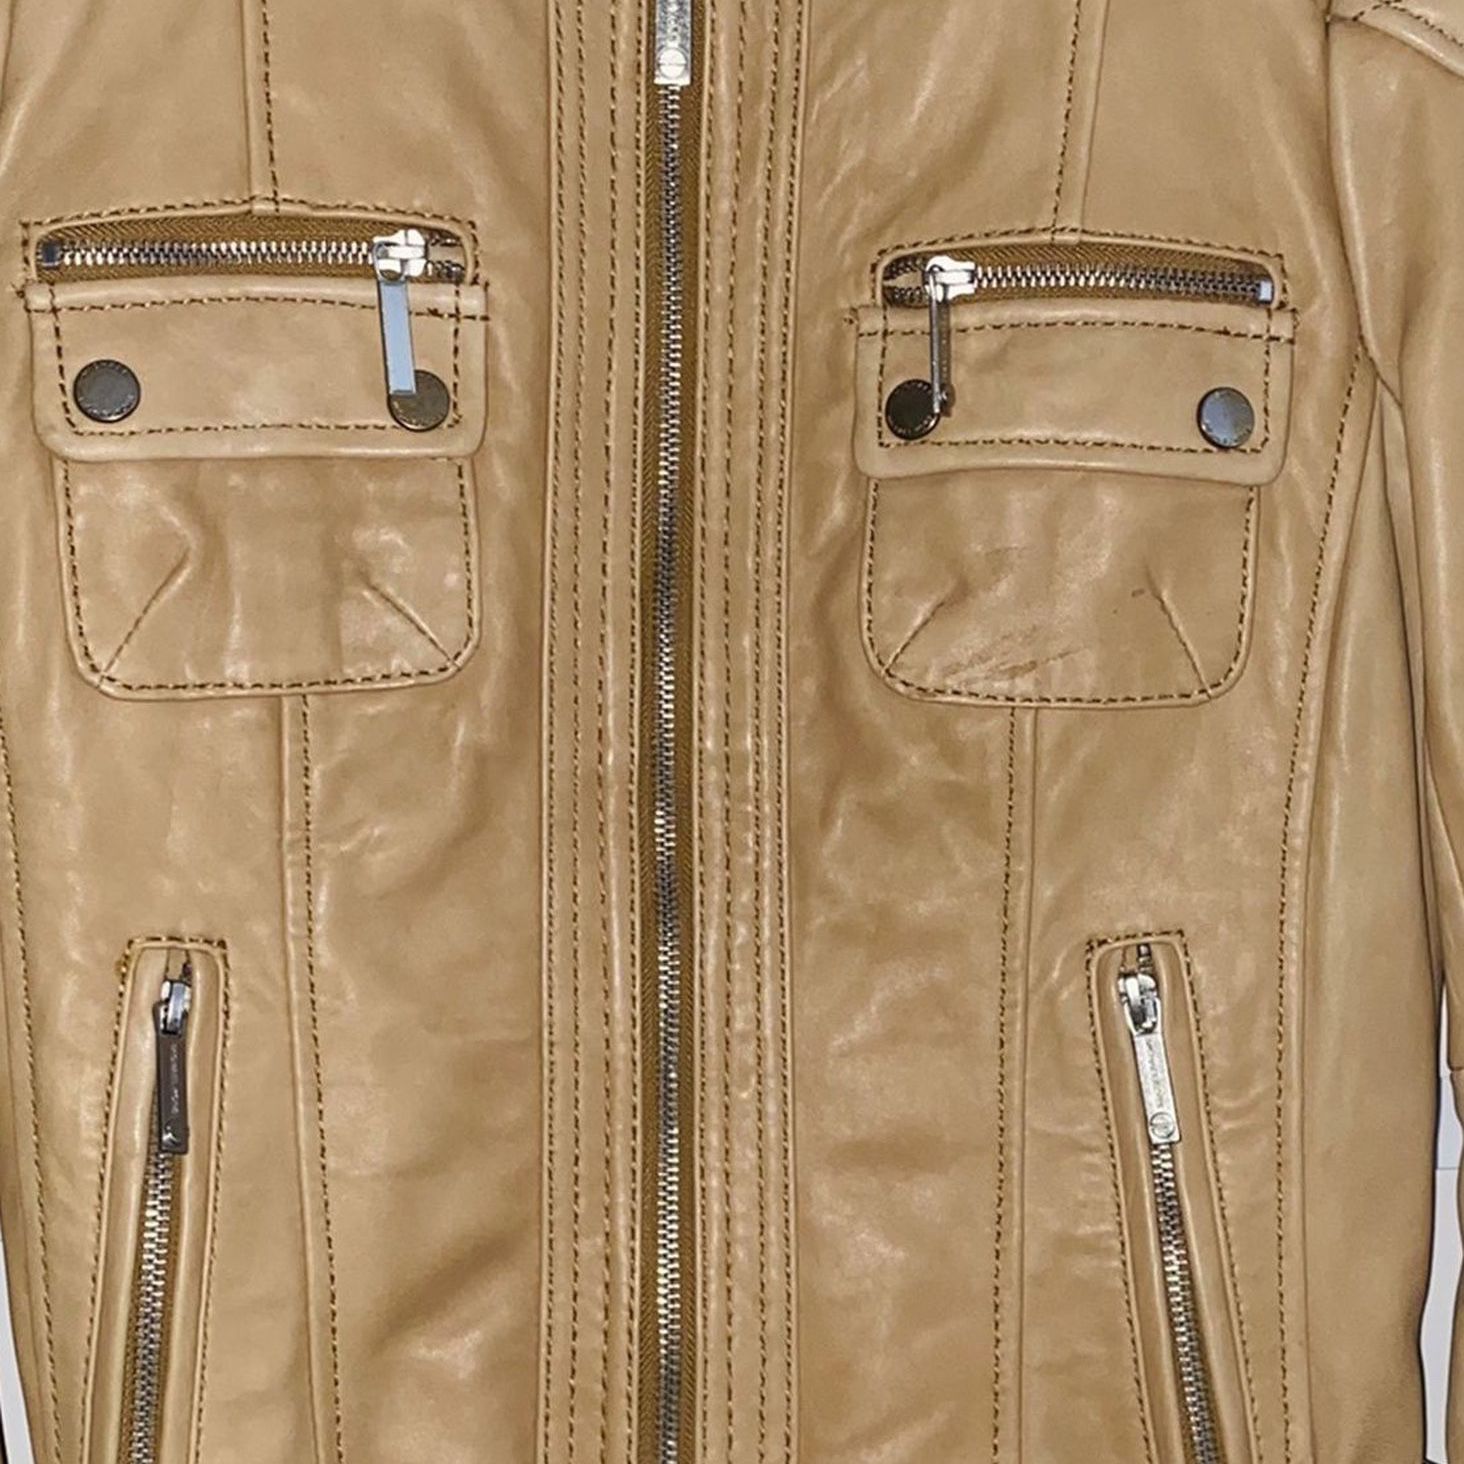 NEW Authentic MICHAEL KORS Leather Moto Jacket Size S